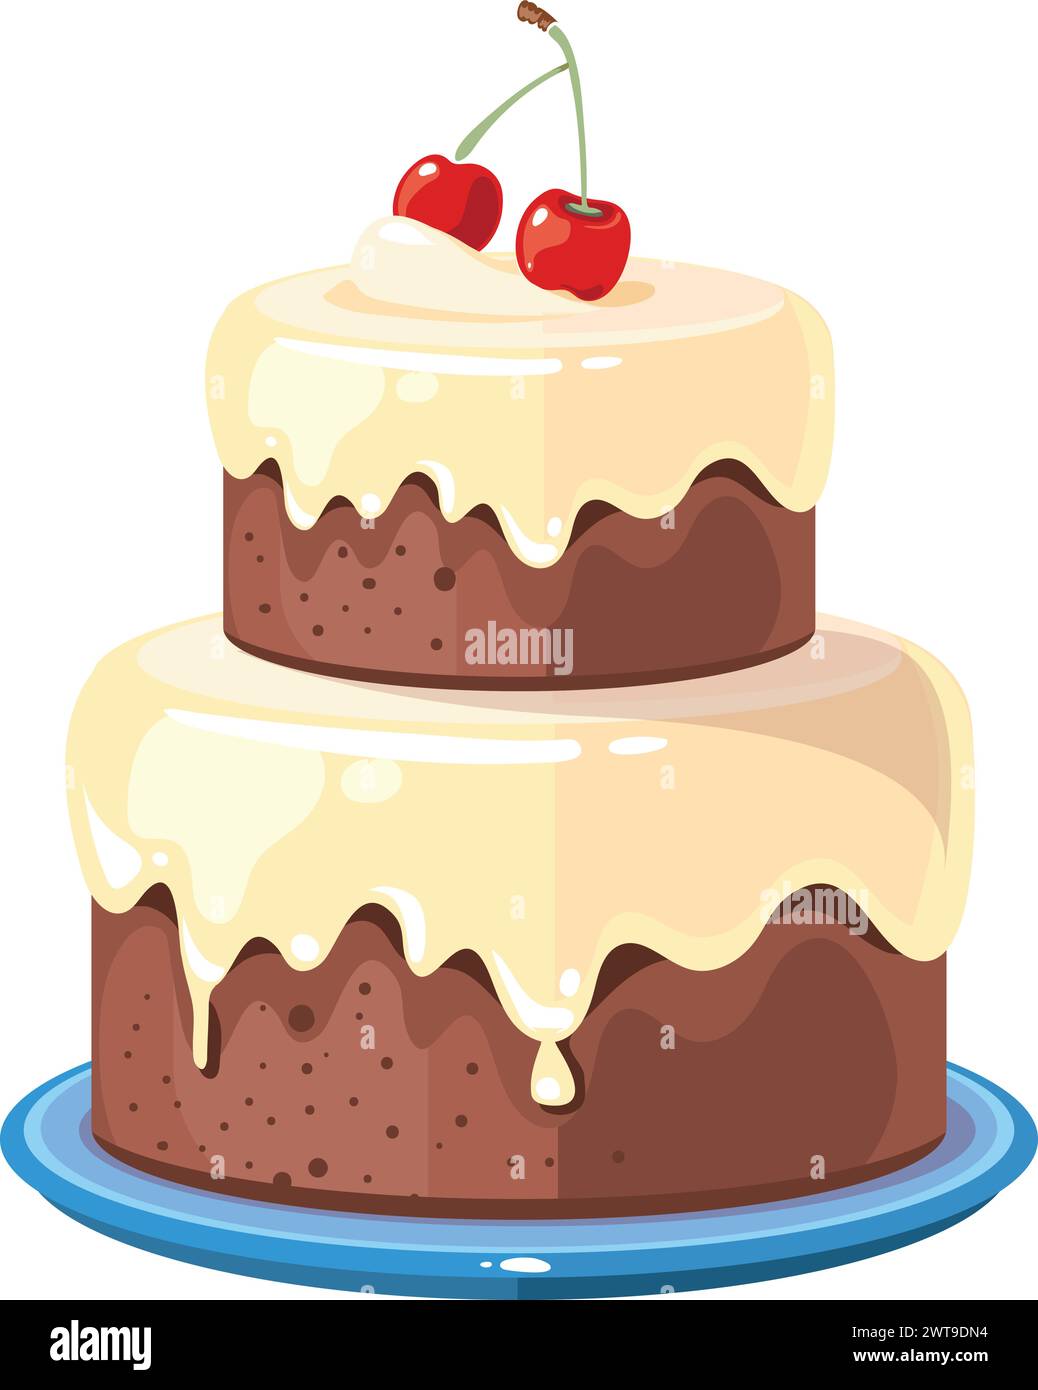 Gâteau de mariage avec cerise. Pâtisserie au chocolat de dessin animé Illustration de Vecteur